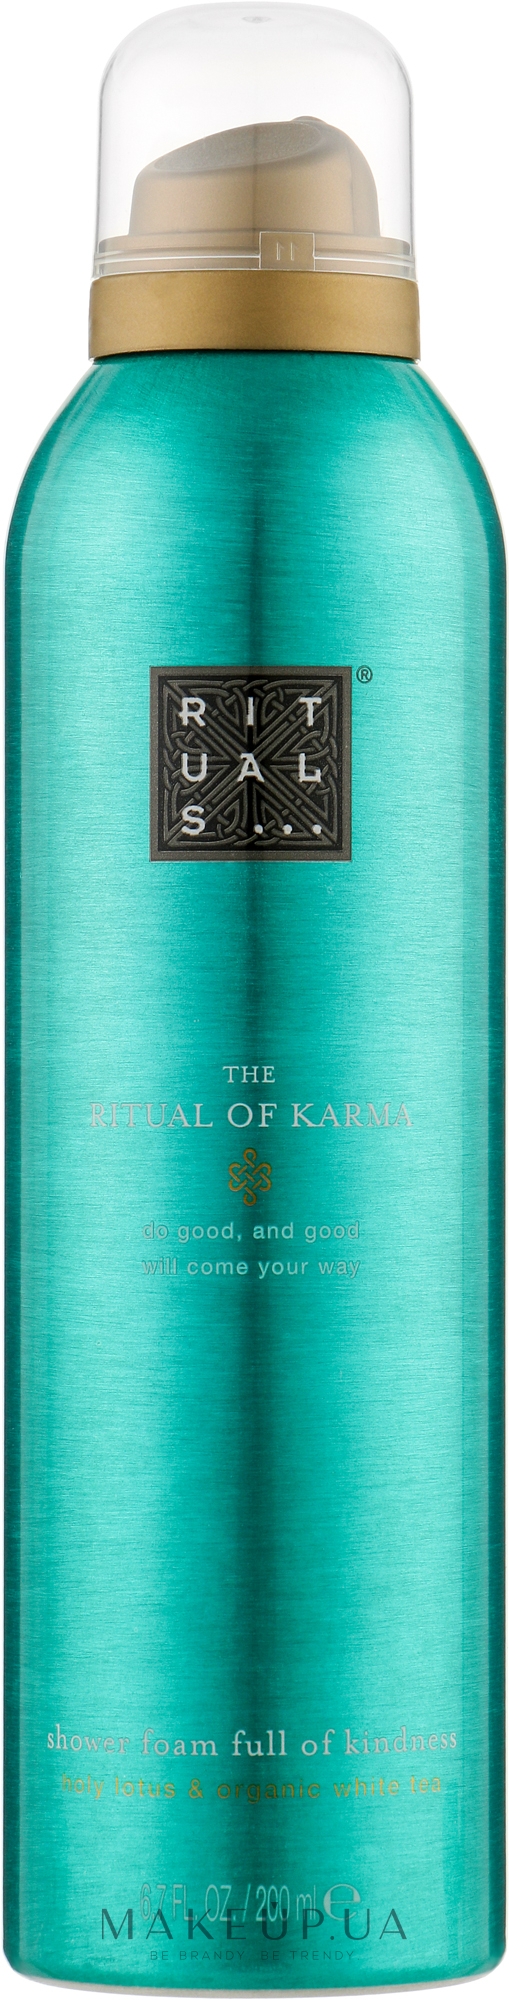 Rituals The Ritual of Karma Foaming Shower Gel - Гель для душа